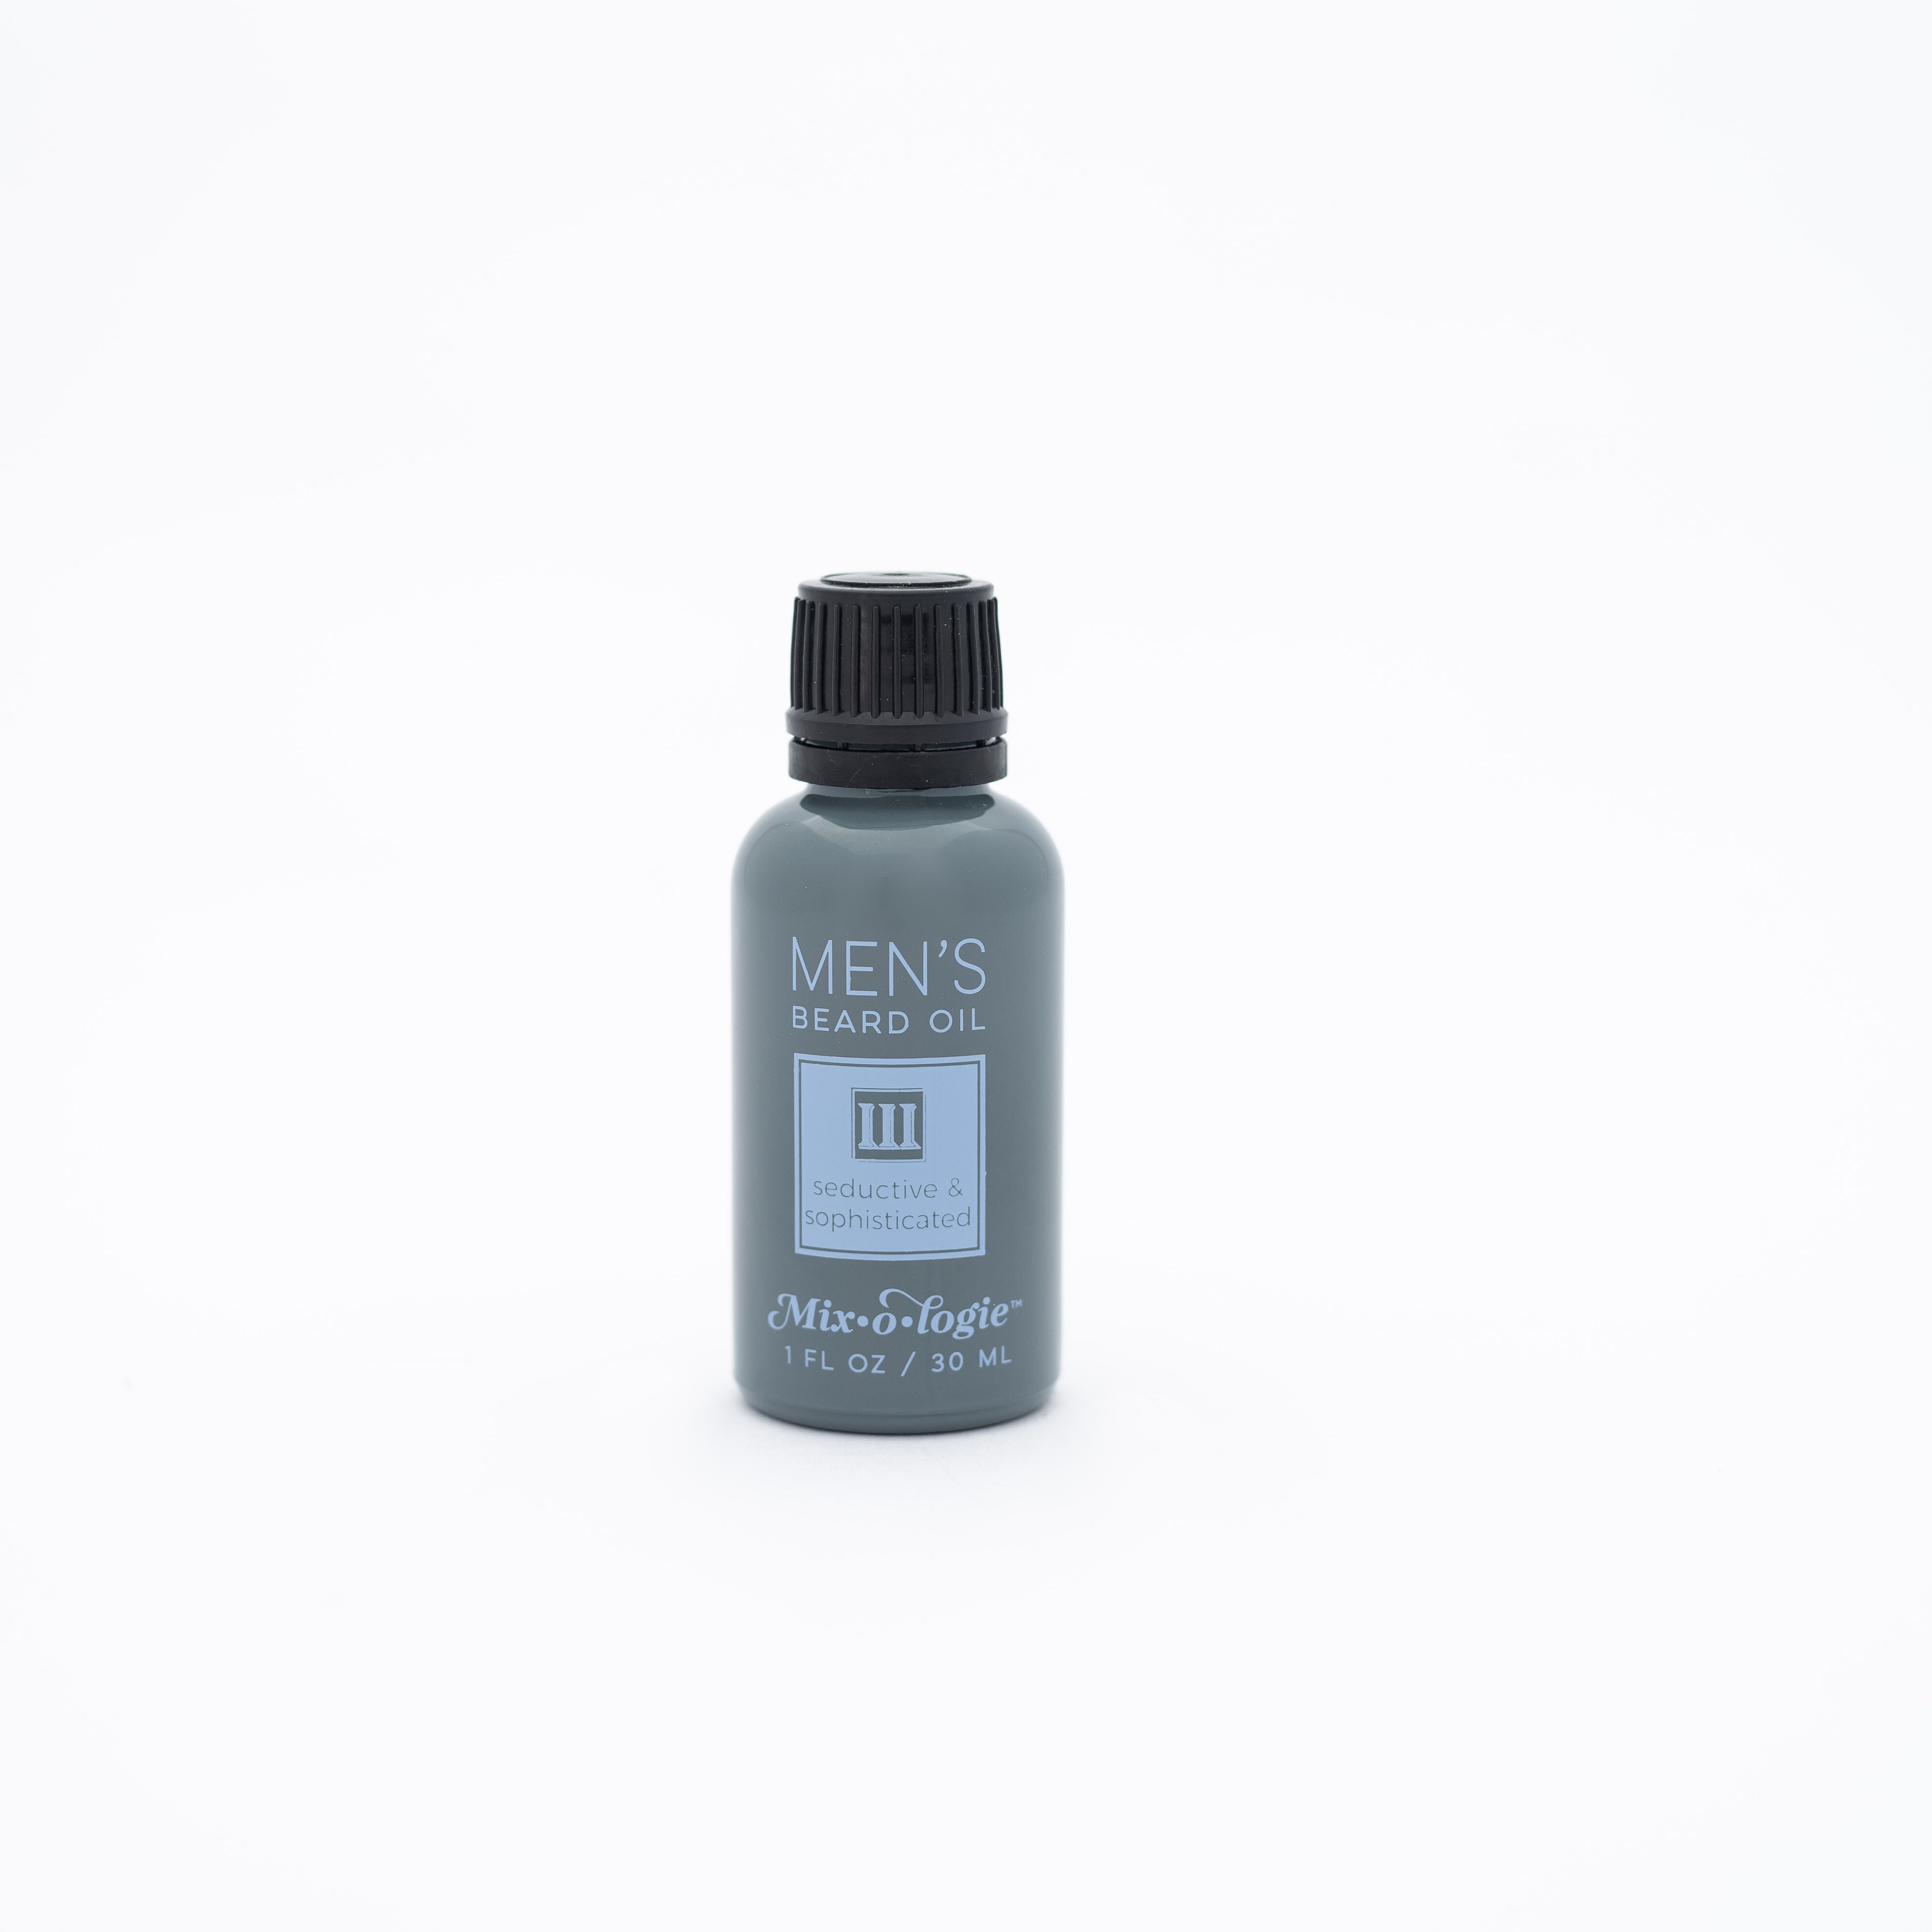 MEN-III Beard Oil (Seductive & Sophisticated) - Tester